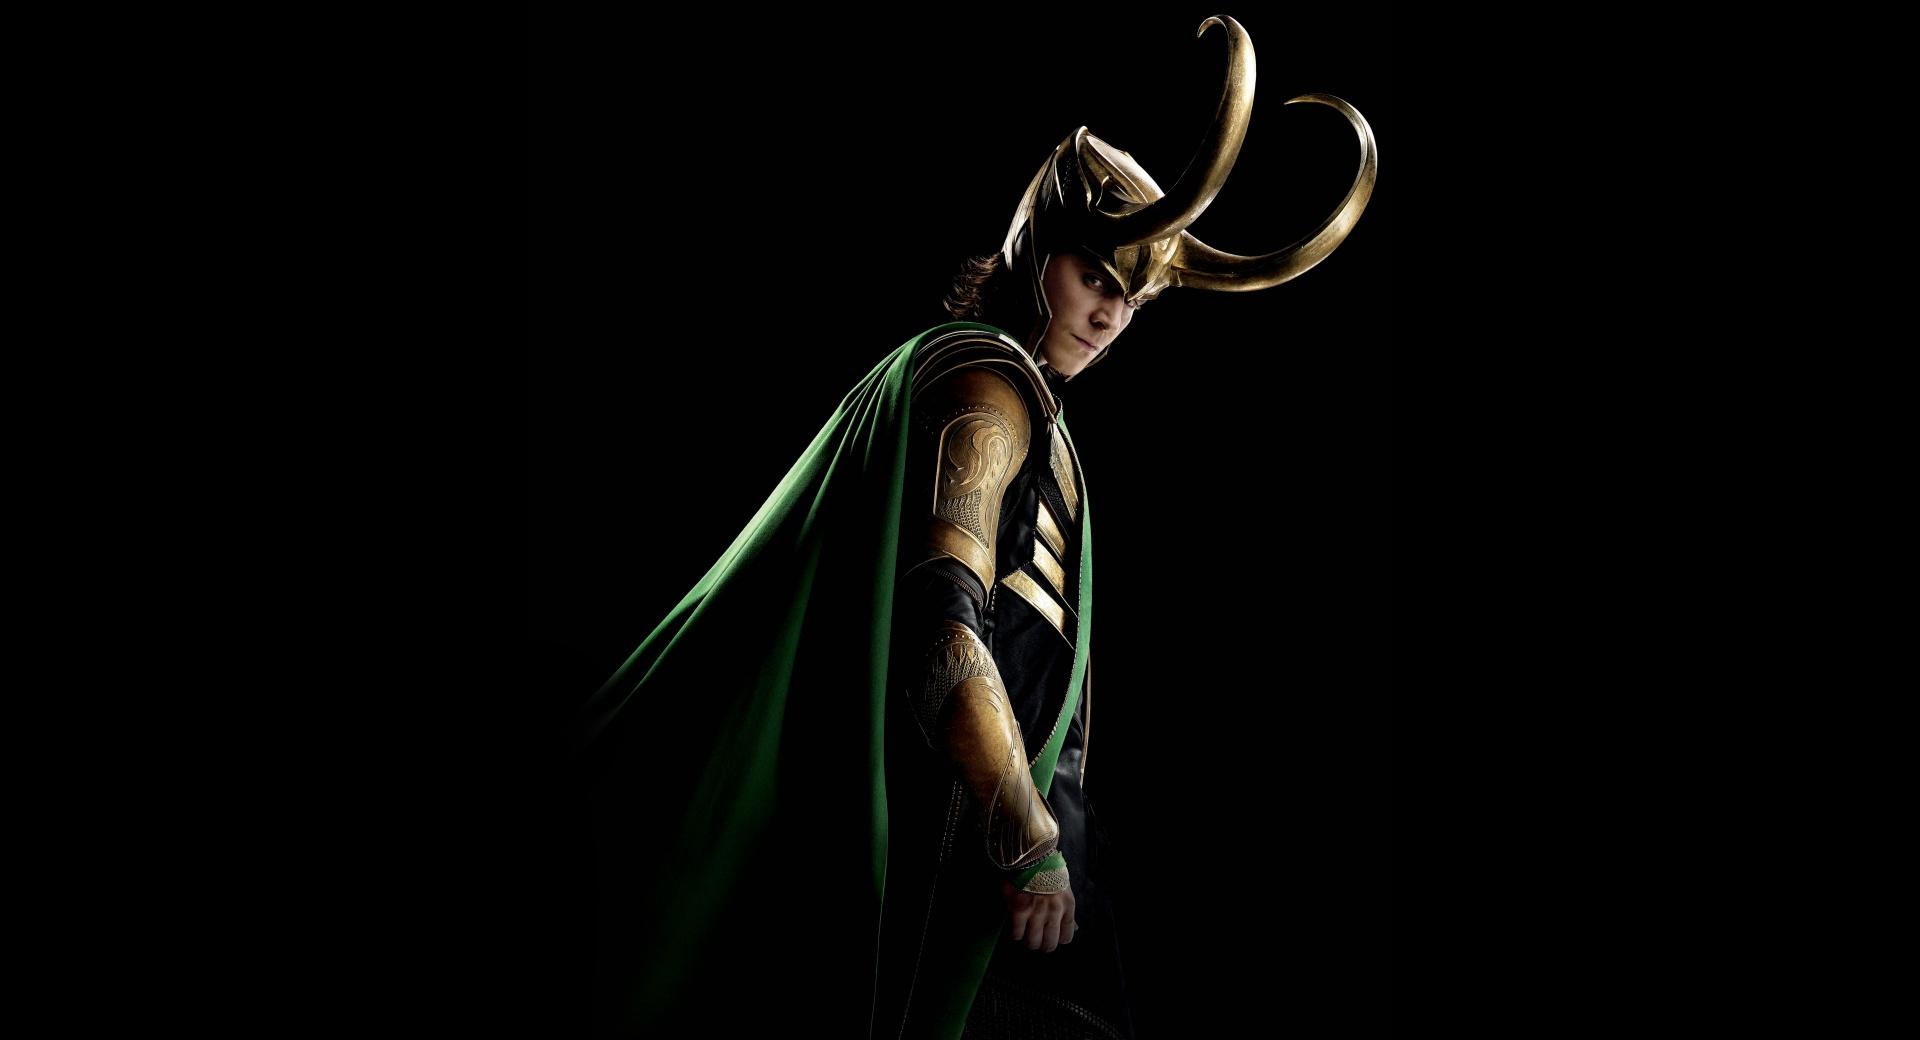 Thor The Dark World Tom Hiddleston as Loki wallpapers HD quality